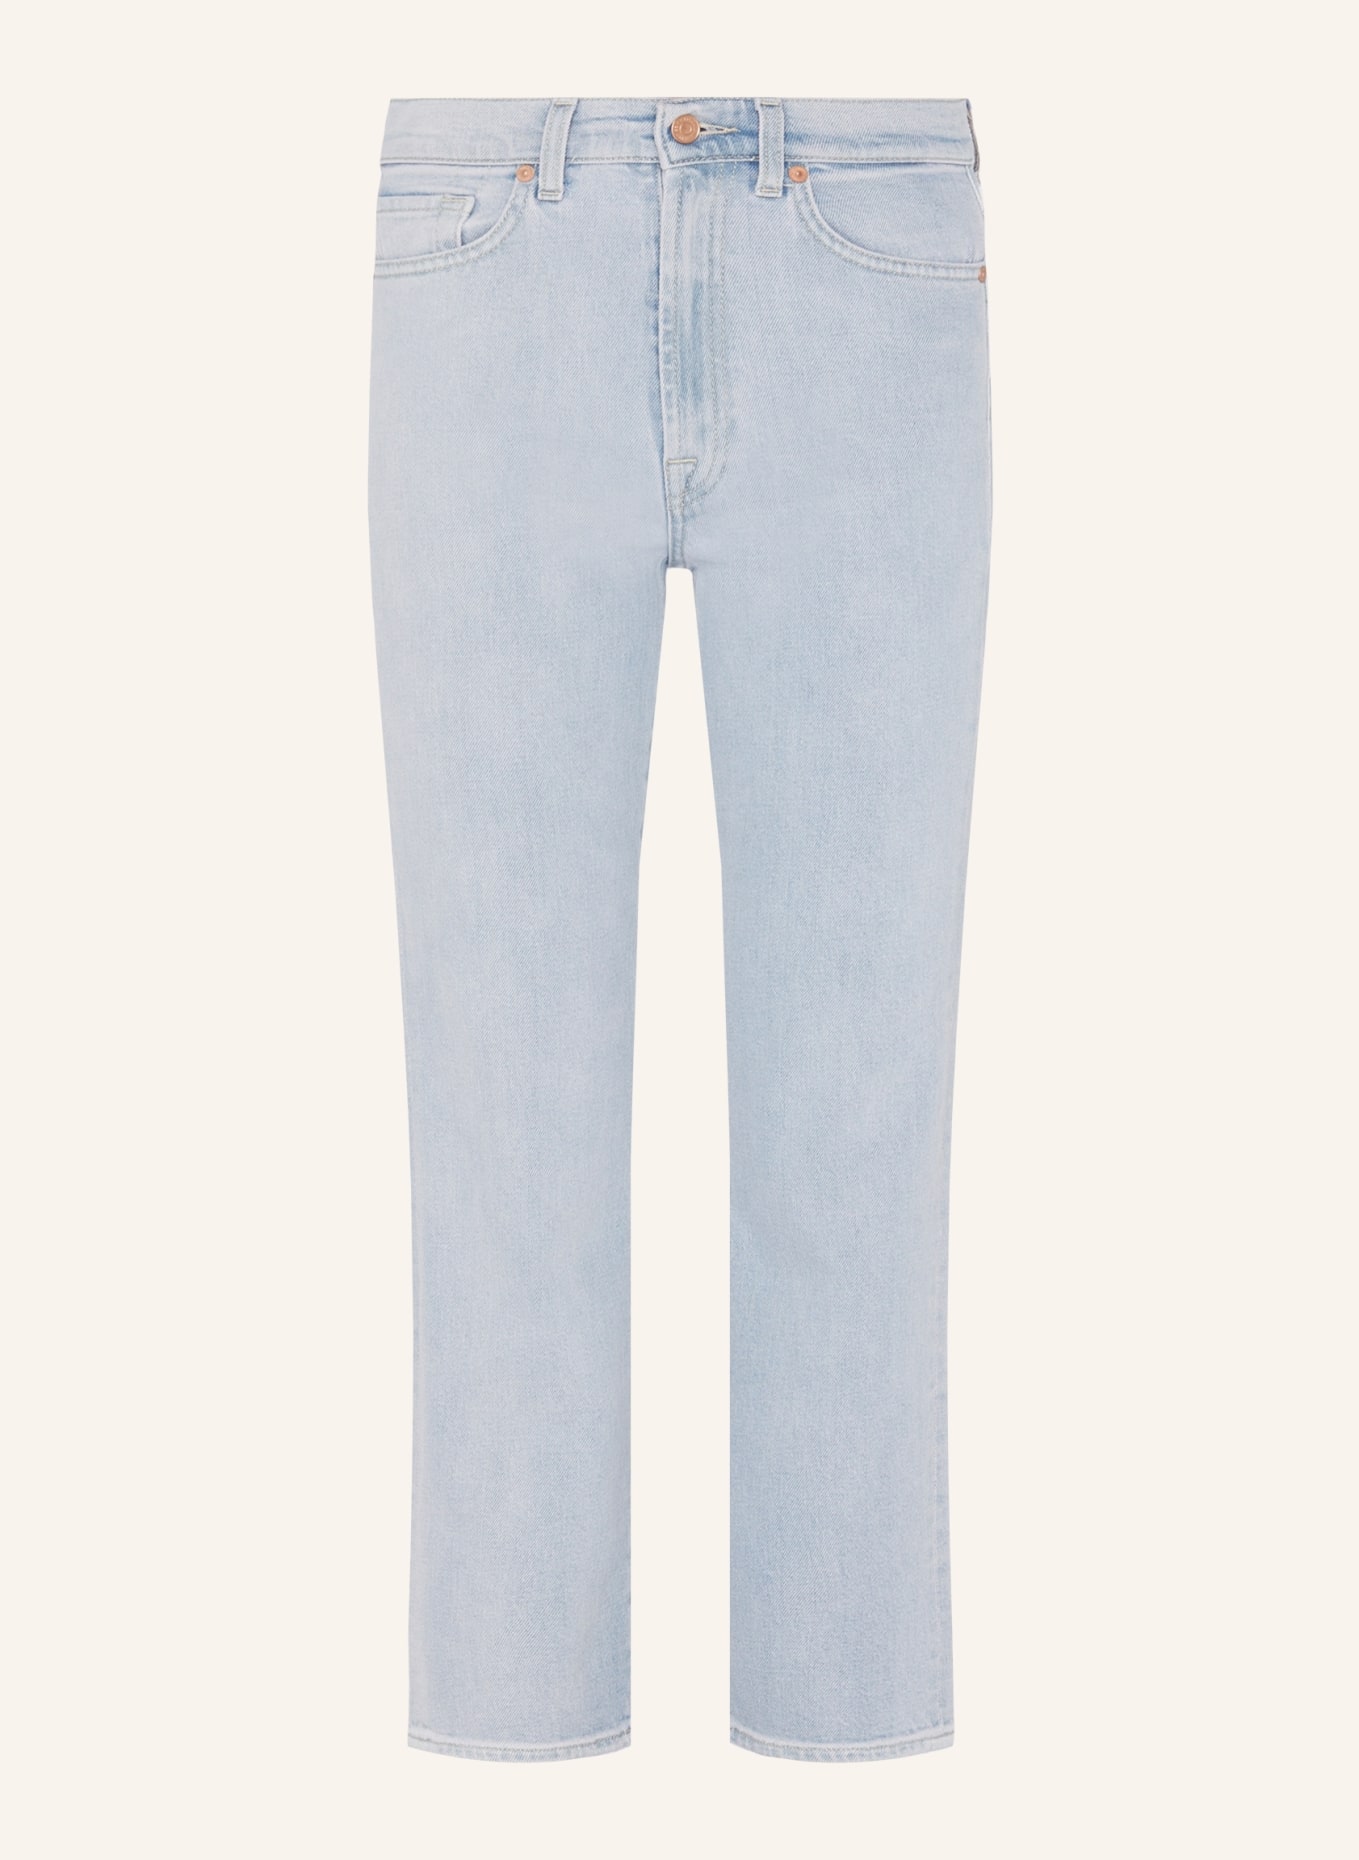 7 for all mankind Jeans  LOGAN STOVEPIPE Straight Fit, Farbe: BLAU (Bild 1)